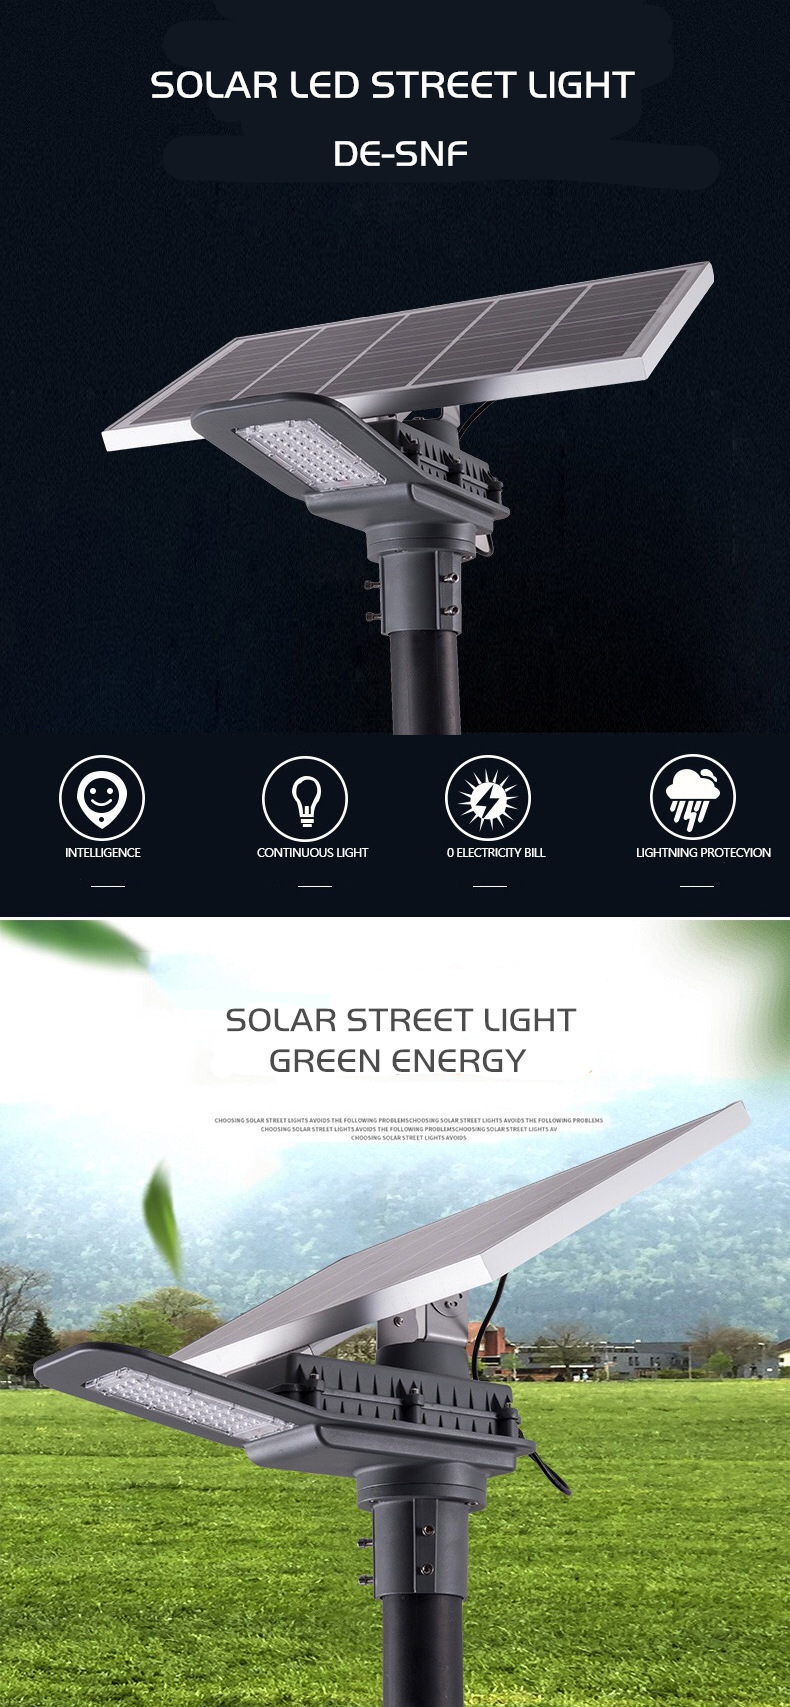 DE-SNF SOLAR LED STREET LIGHT DELIGHT ECO ENERGY